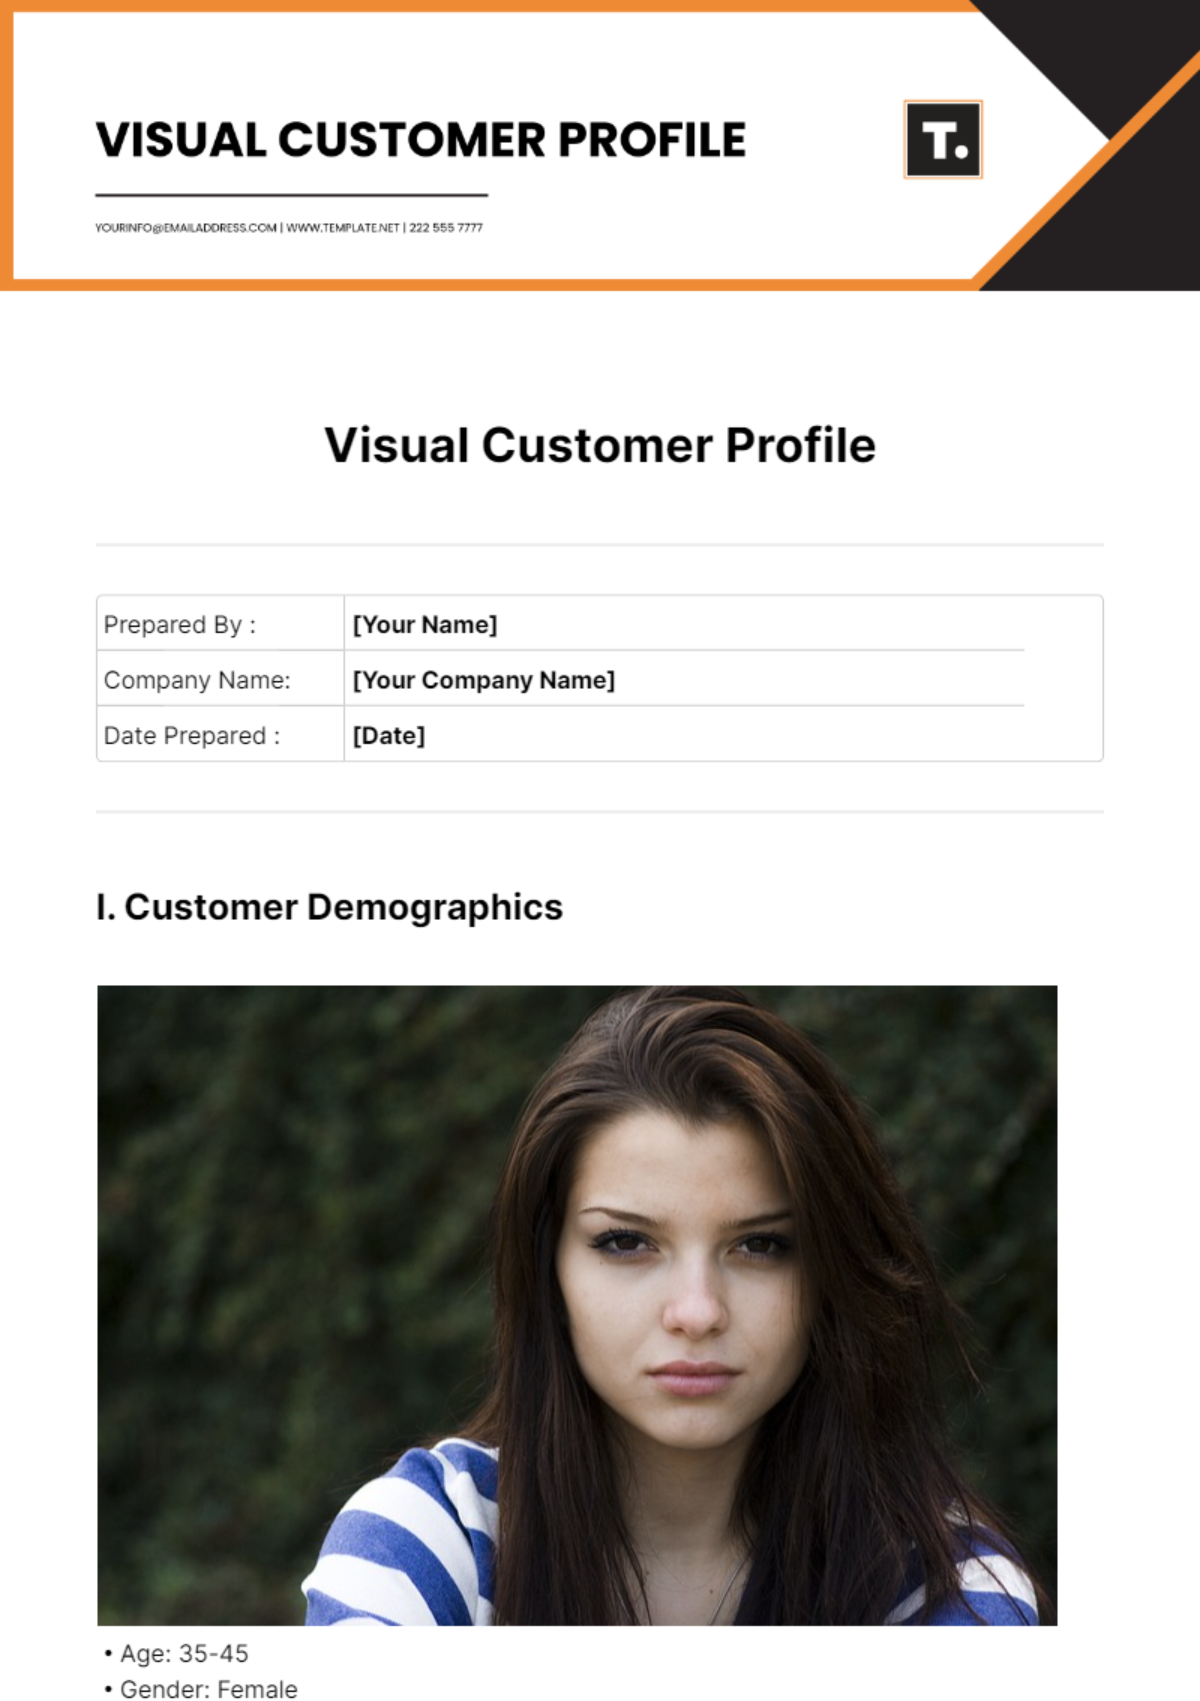 Visual Customer Profile Template